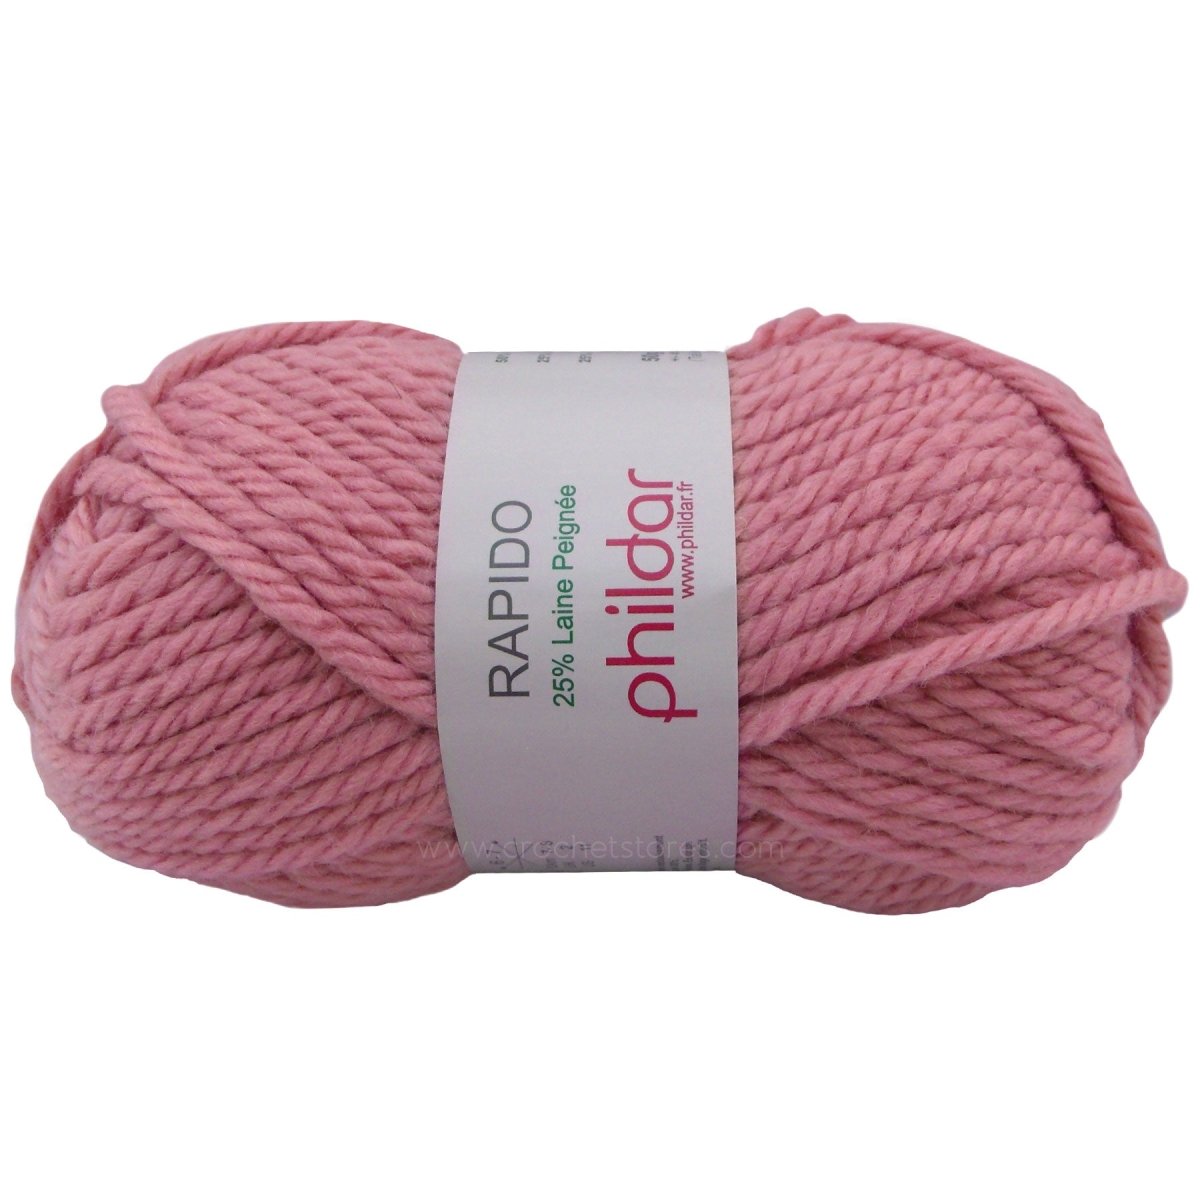 RAPIDO - Crochetstores500981-213307673856062